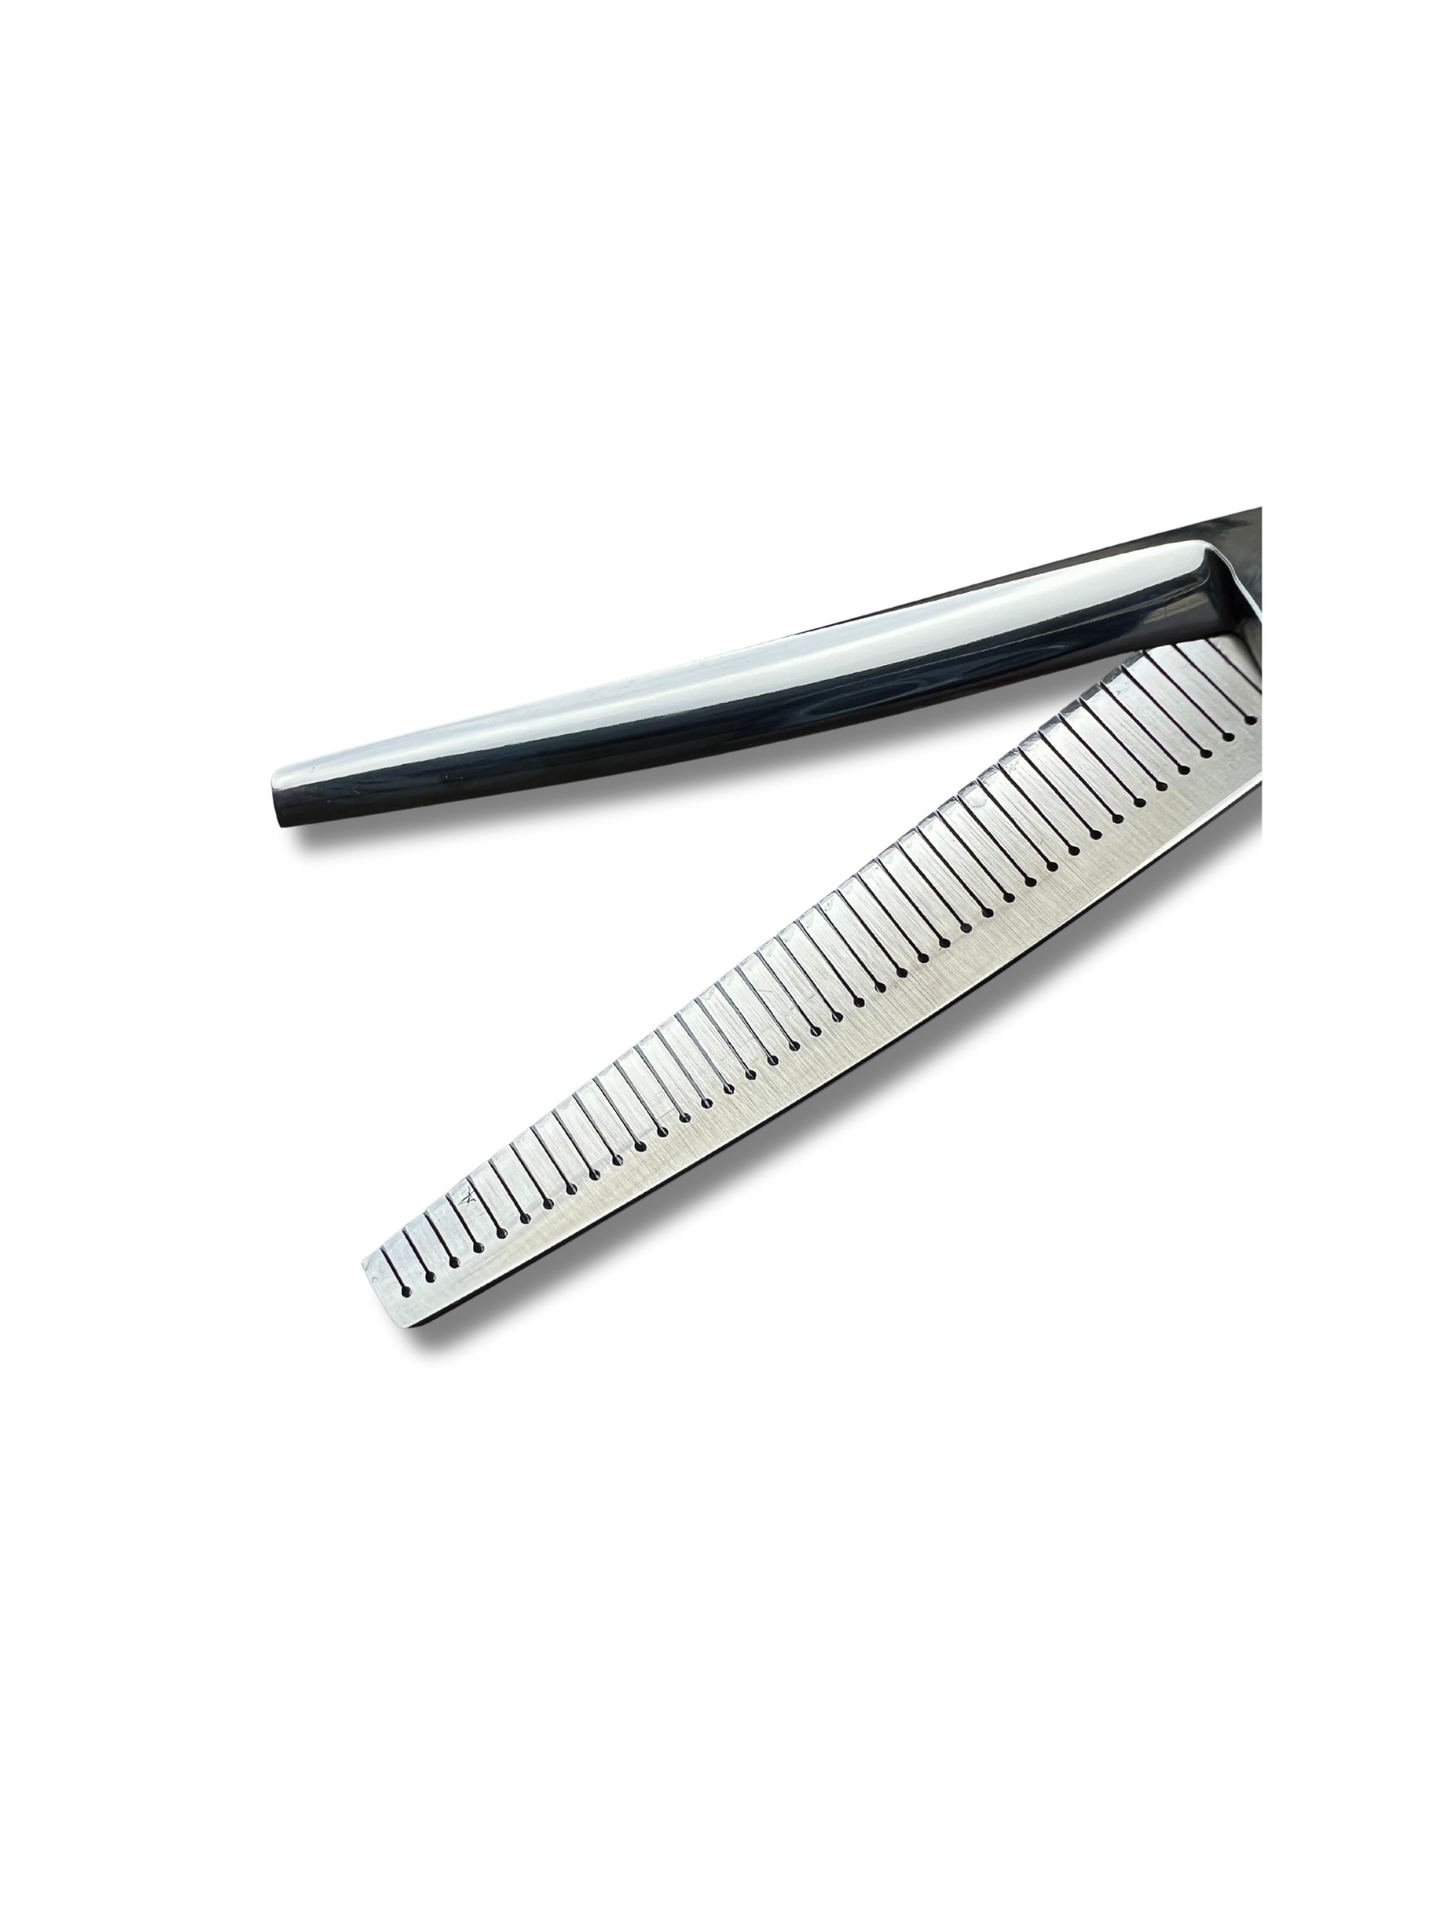 QRBF-7040 professional curved thinning scissor 7.0" 40 teeth (RH & LH)